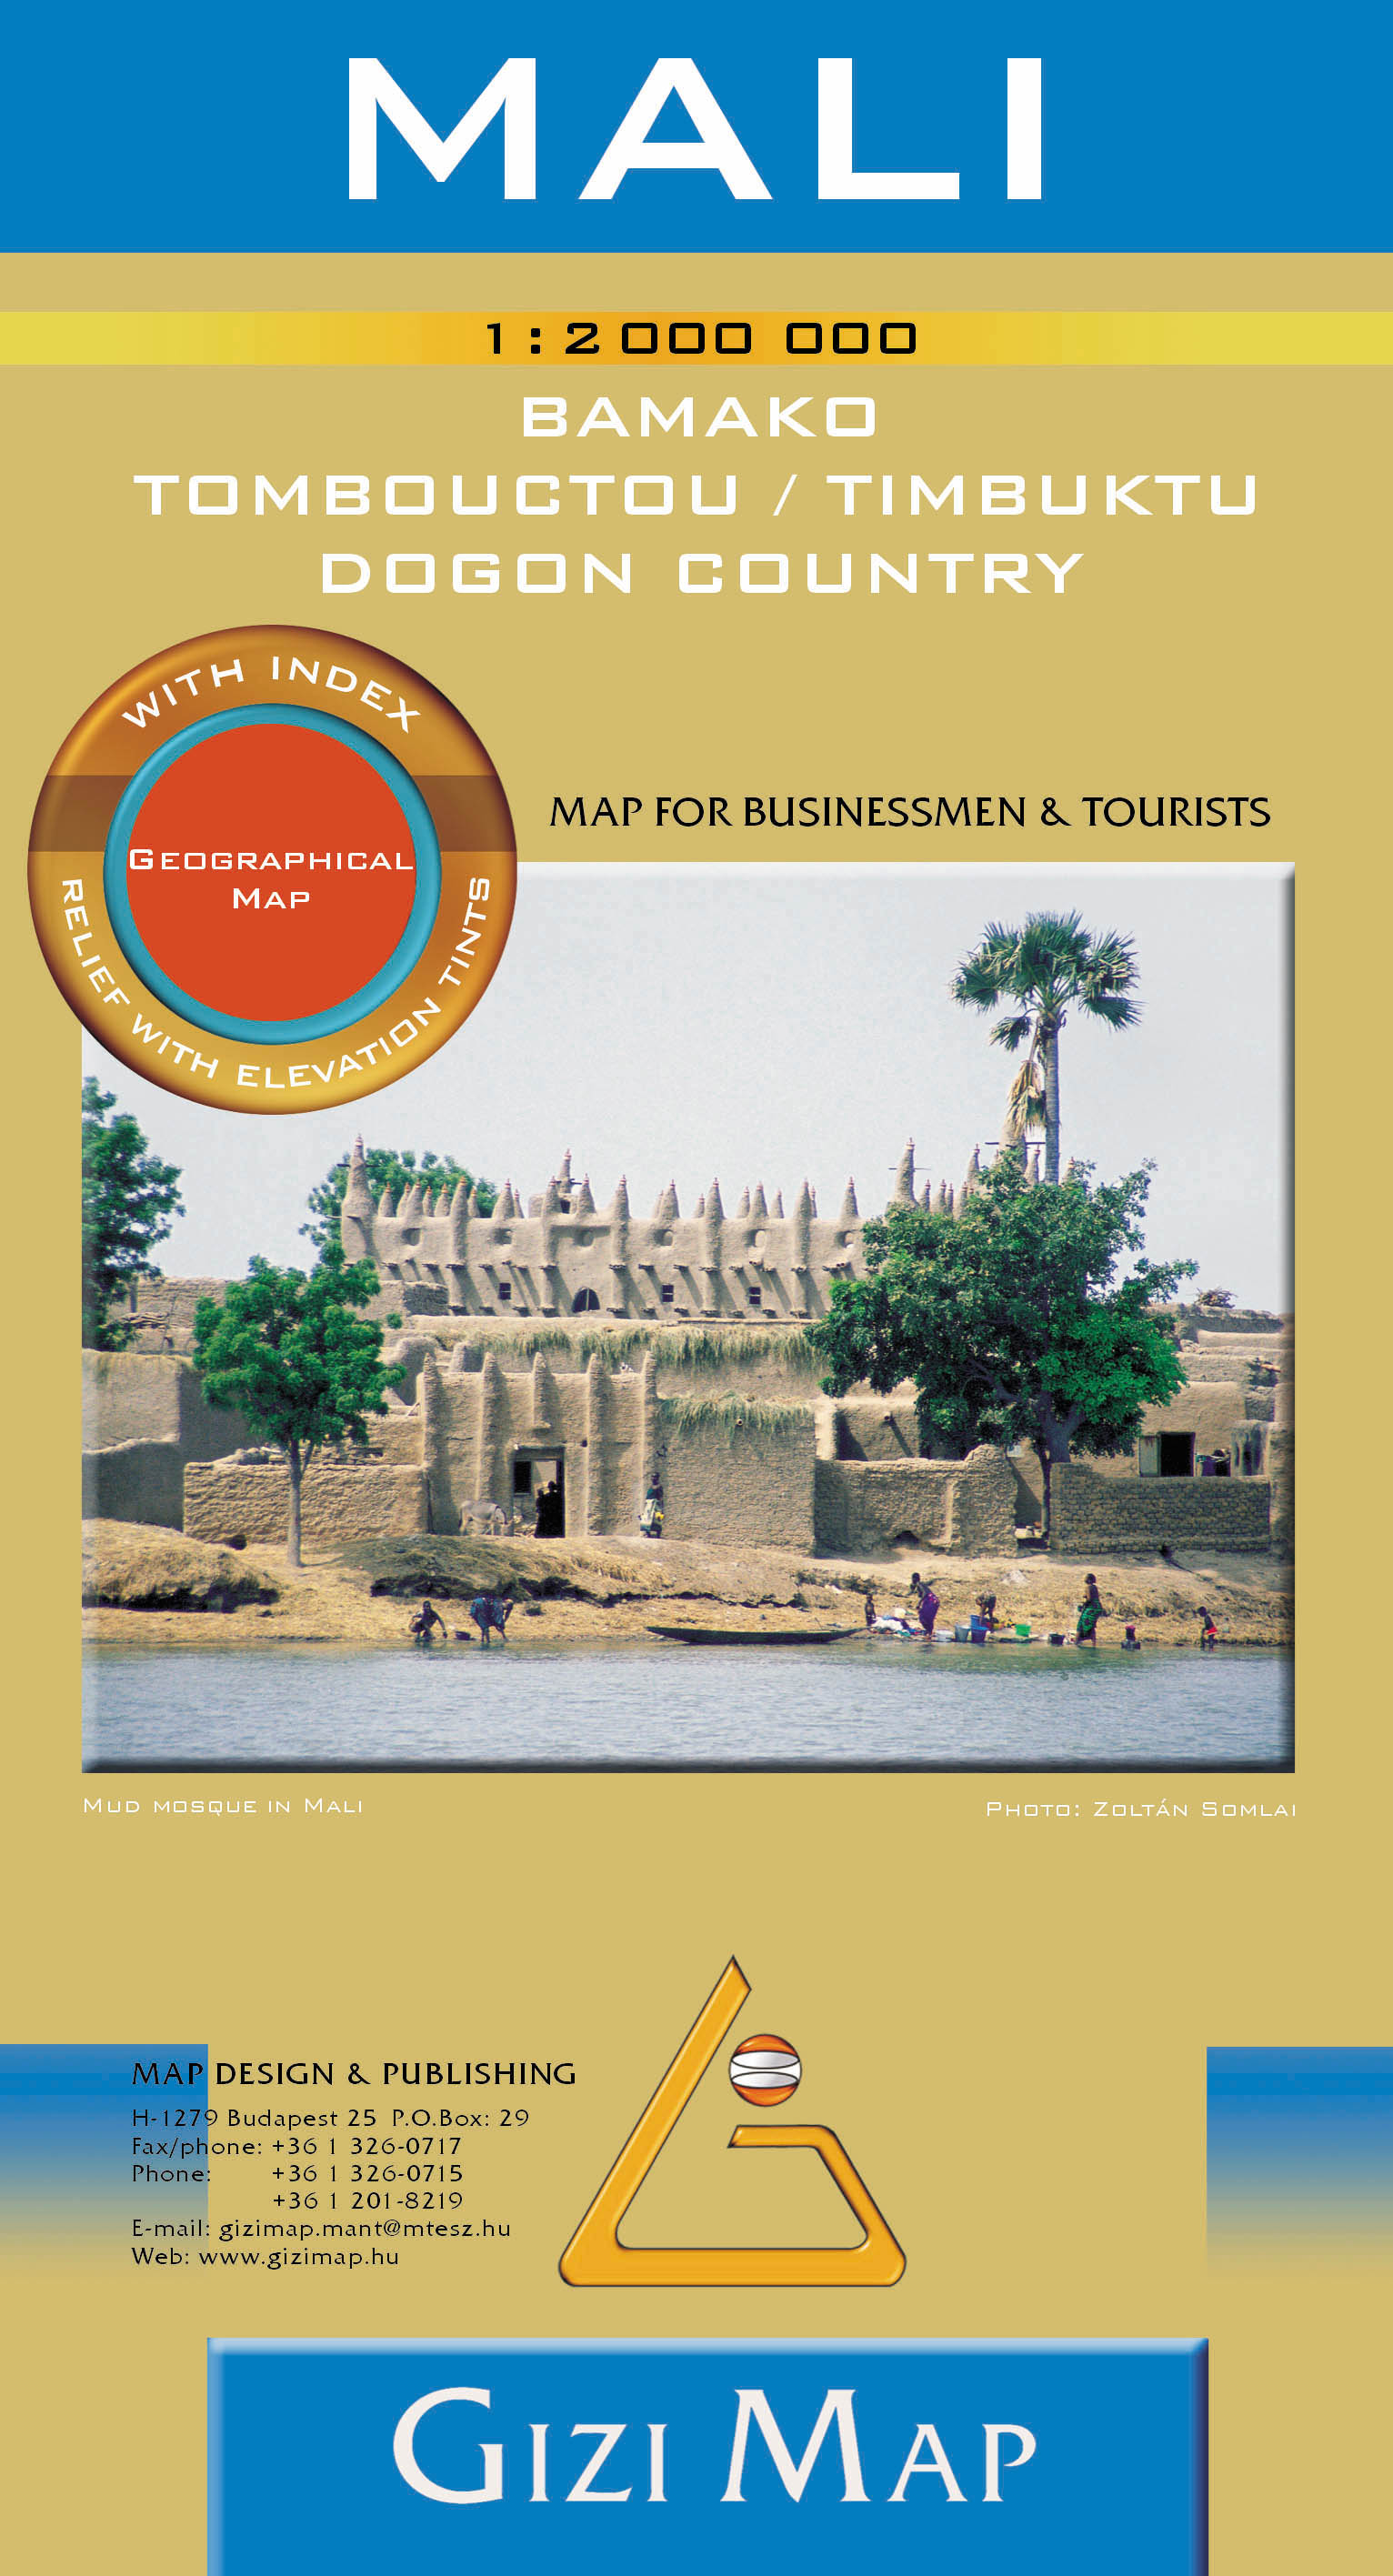 Inset maps: Bamako1:50.000, Central Bamako 1:12.000, Tombouctou (Timbuktu) 1:10.000 and Dogon country 1.1.500.000